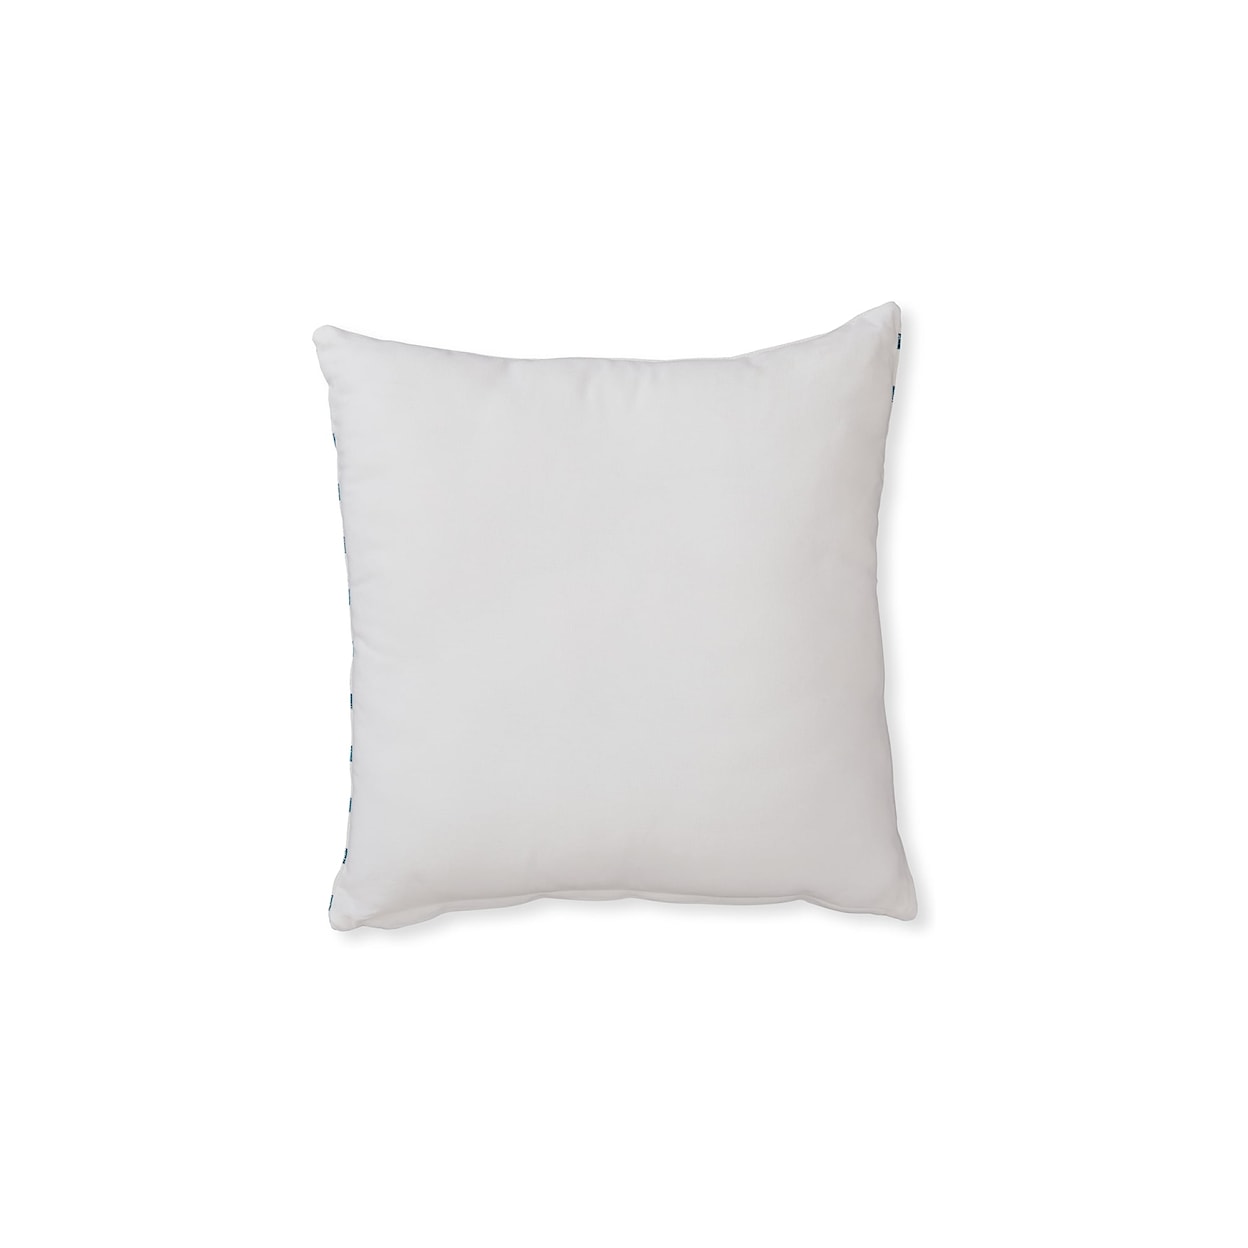 Benchcraft Monique Pillow (Set of 4)